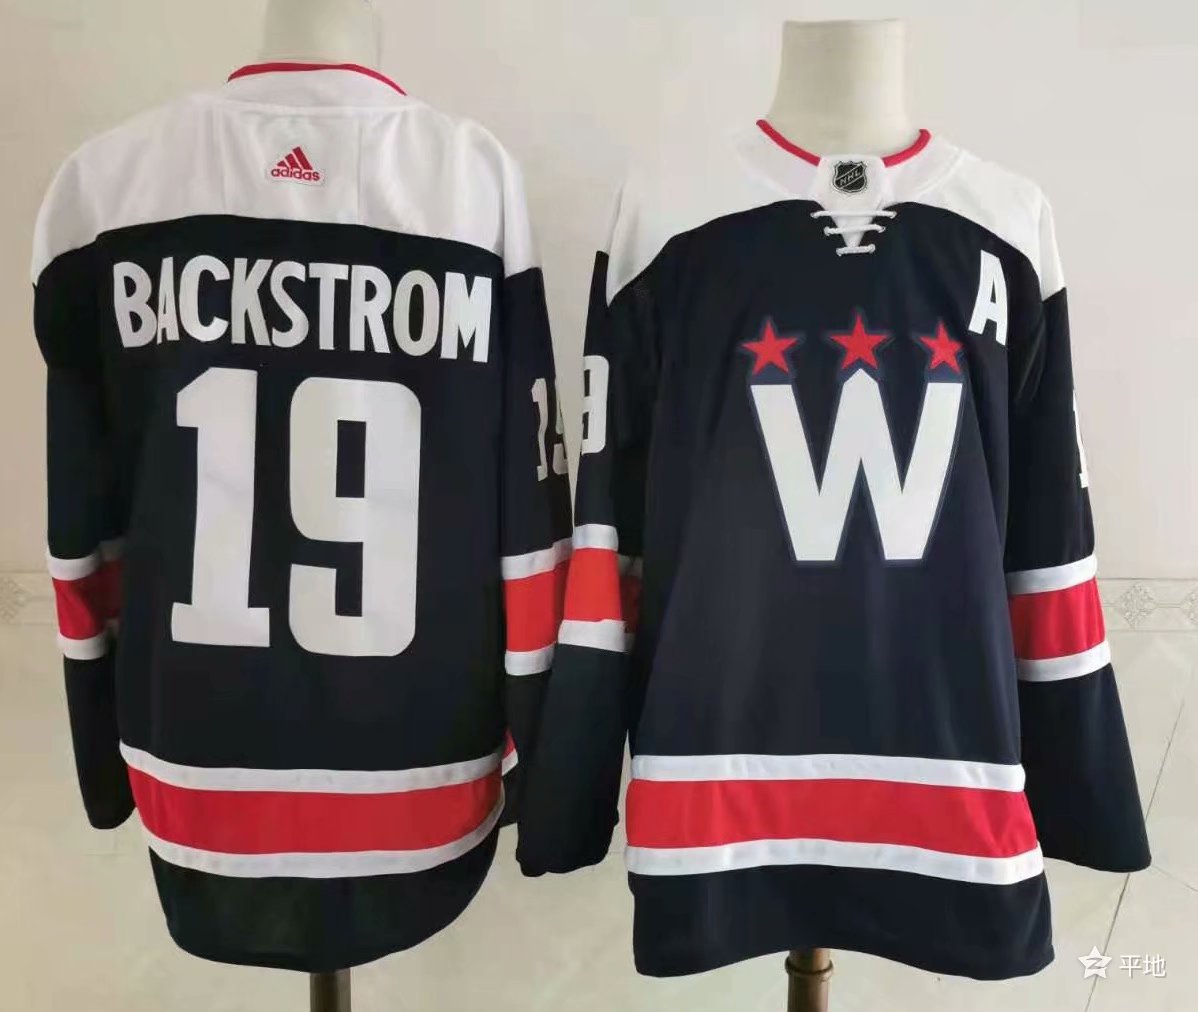 2021 Men Washington Capitals #19 Backstrom blue Adidas Hockey Stitched NHL Jerseys